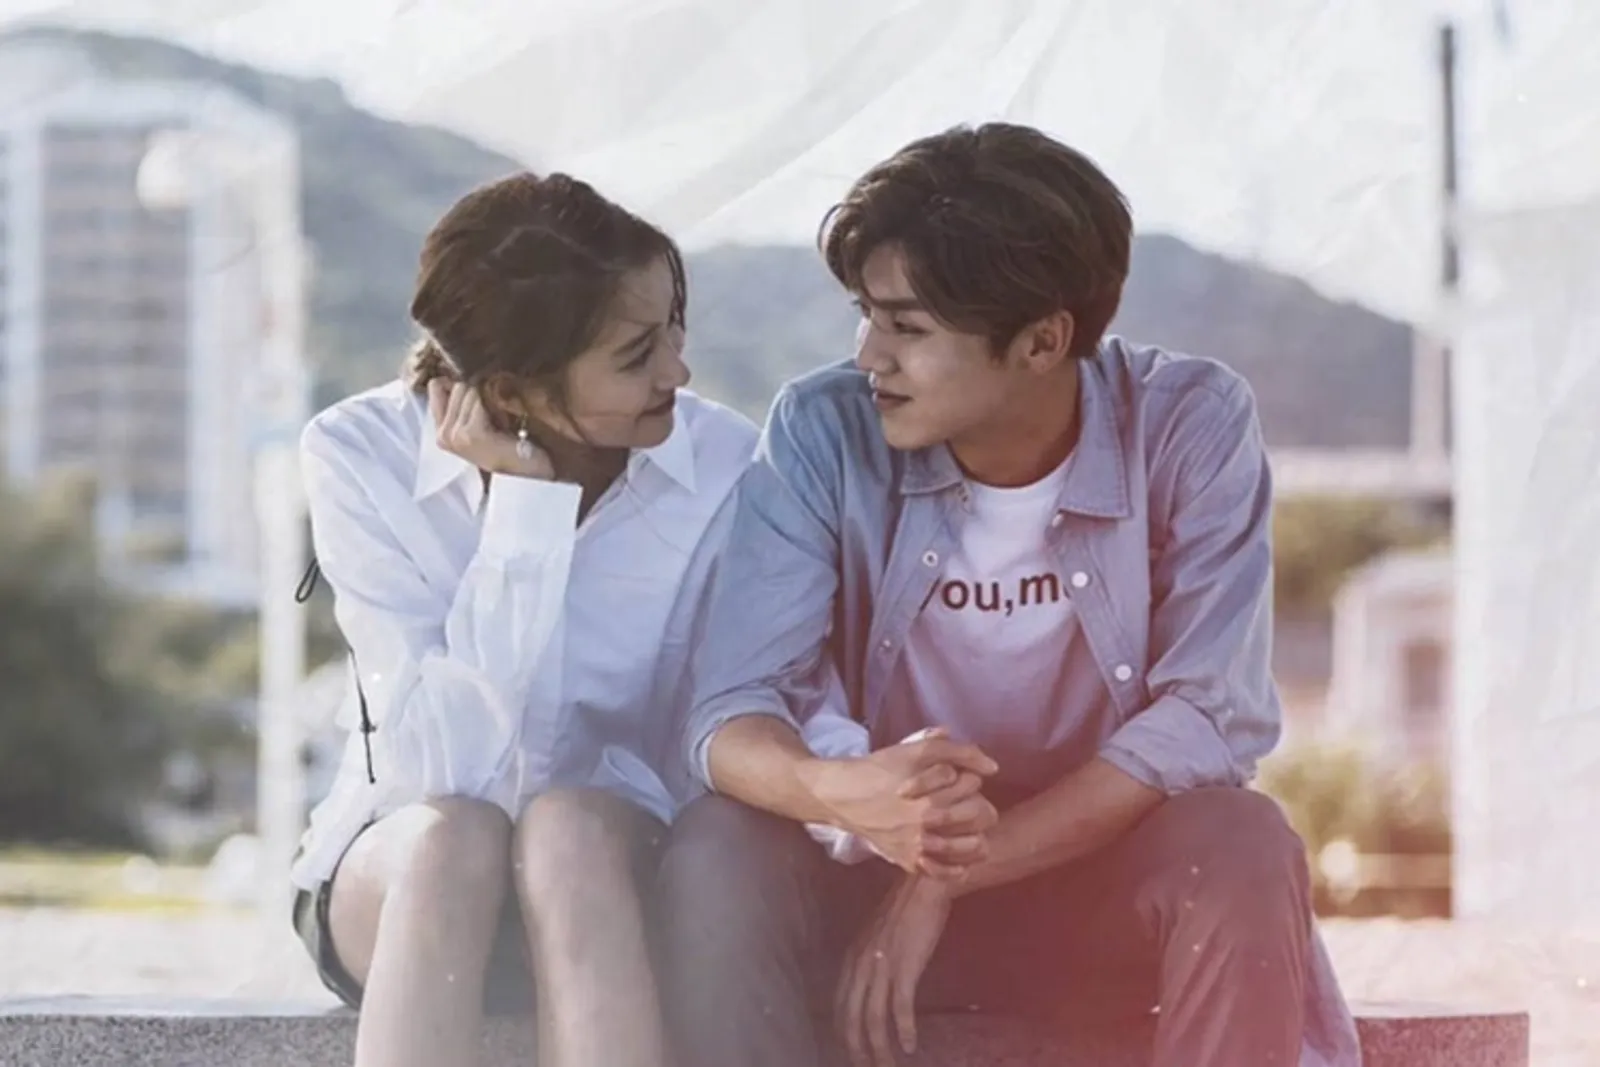 Dikabarkan Segera Nikah, Lika-Liku Cinta Luhan eks EXO & Guan Xiaotong